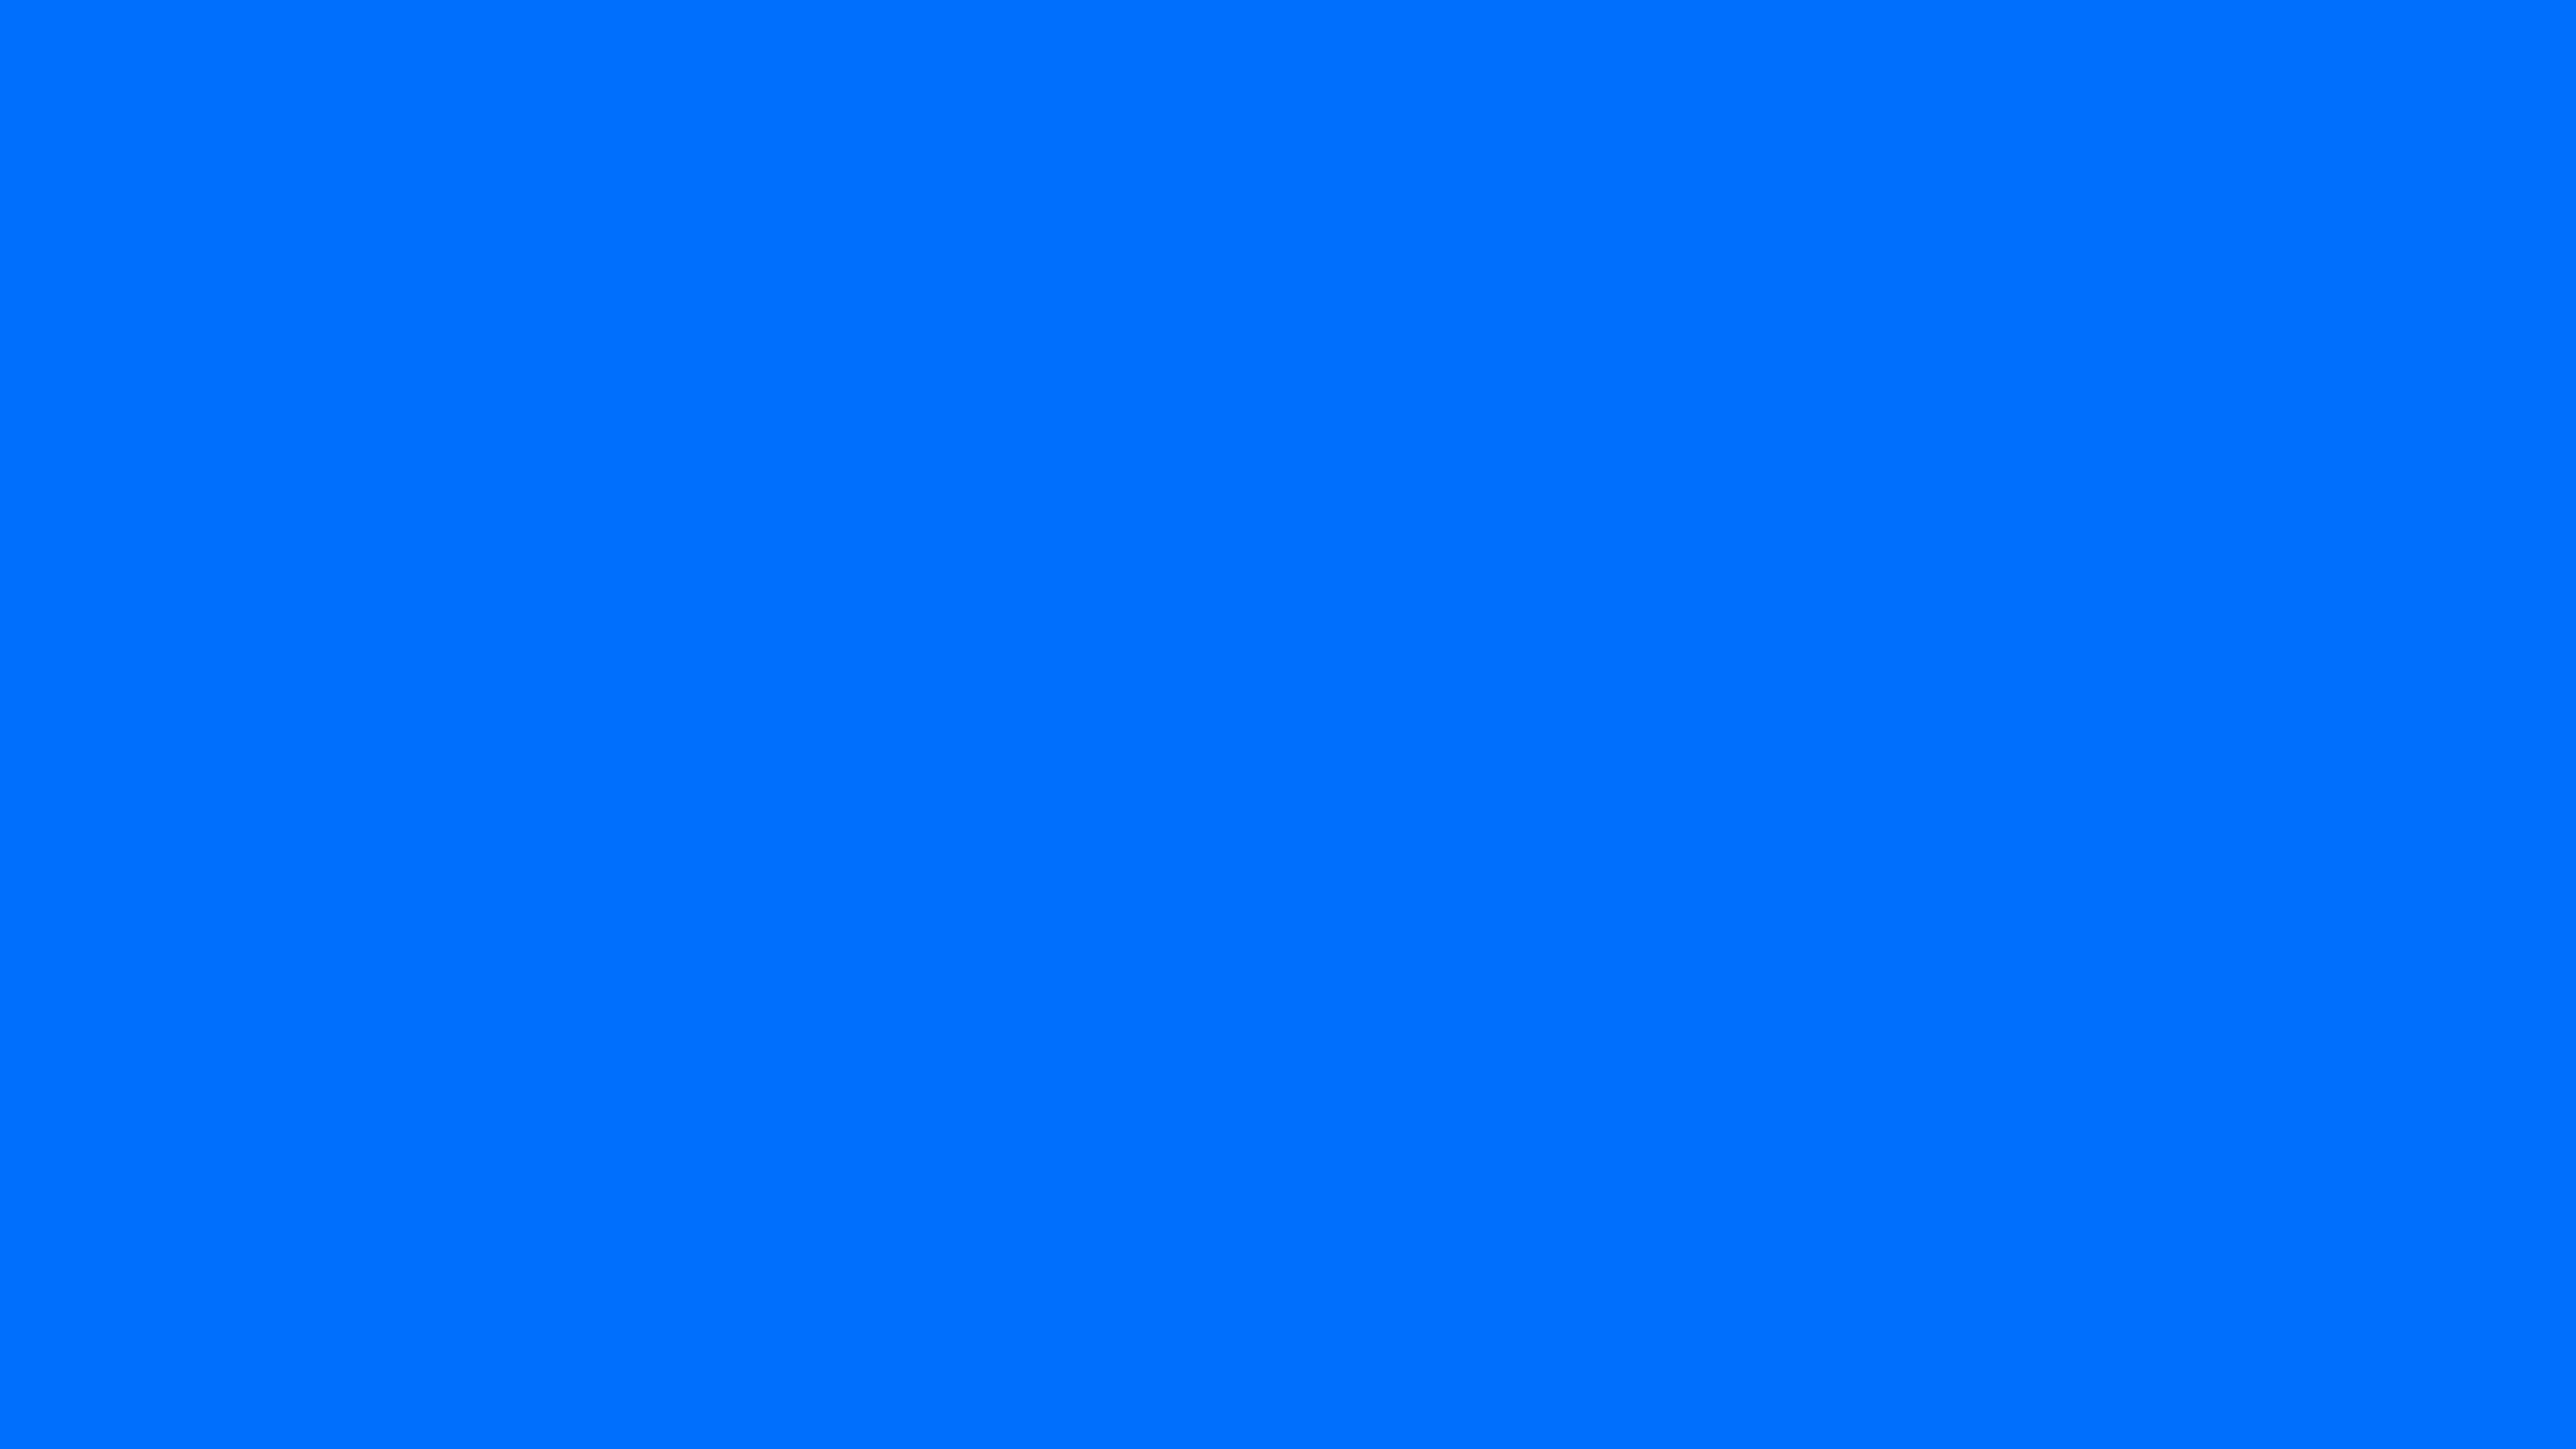 Эггер u525. U525 st9 Делфт голубой. Egger u515 st9 французский голубой. Кроношпан цвет синий 0125 BS. Очень яркий голубой цвет